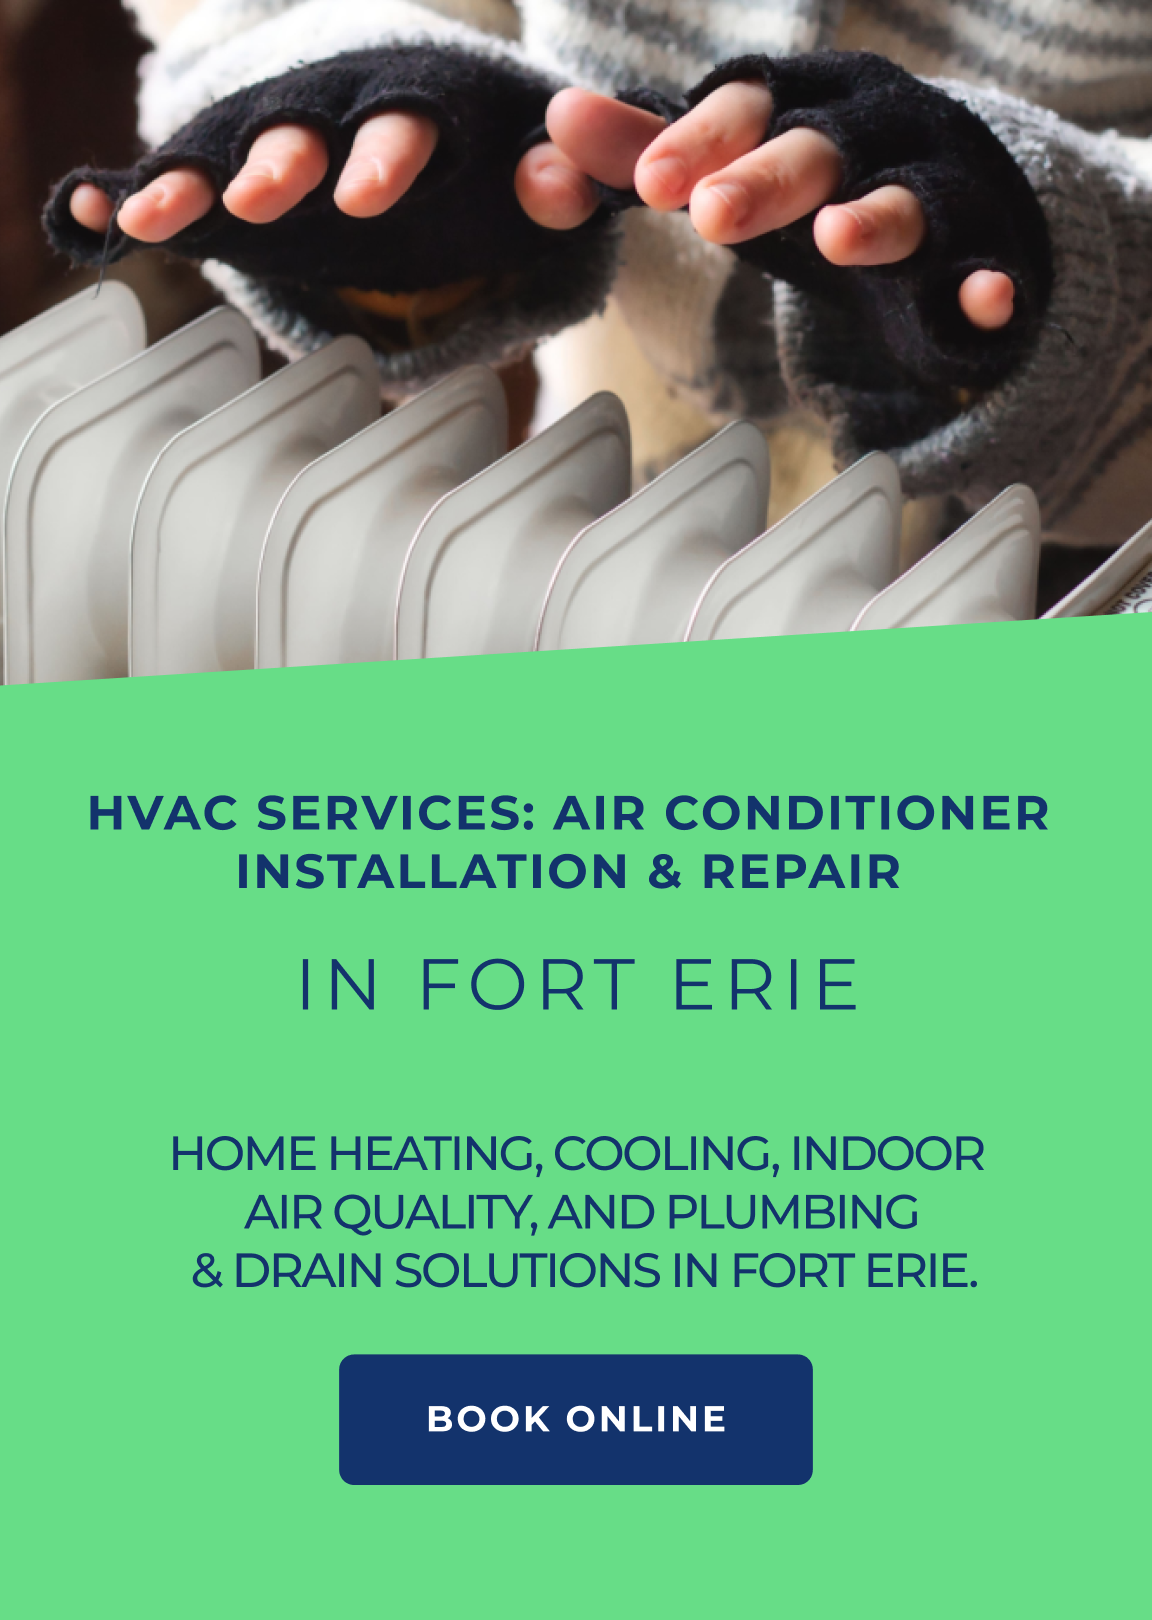 HVAC Fort Erie: Air conditioner installation and repair